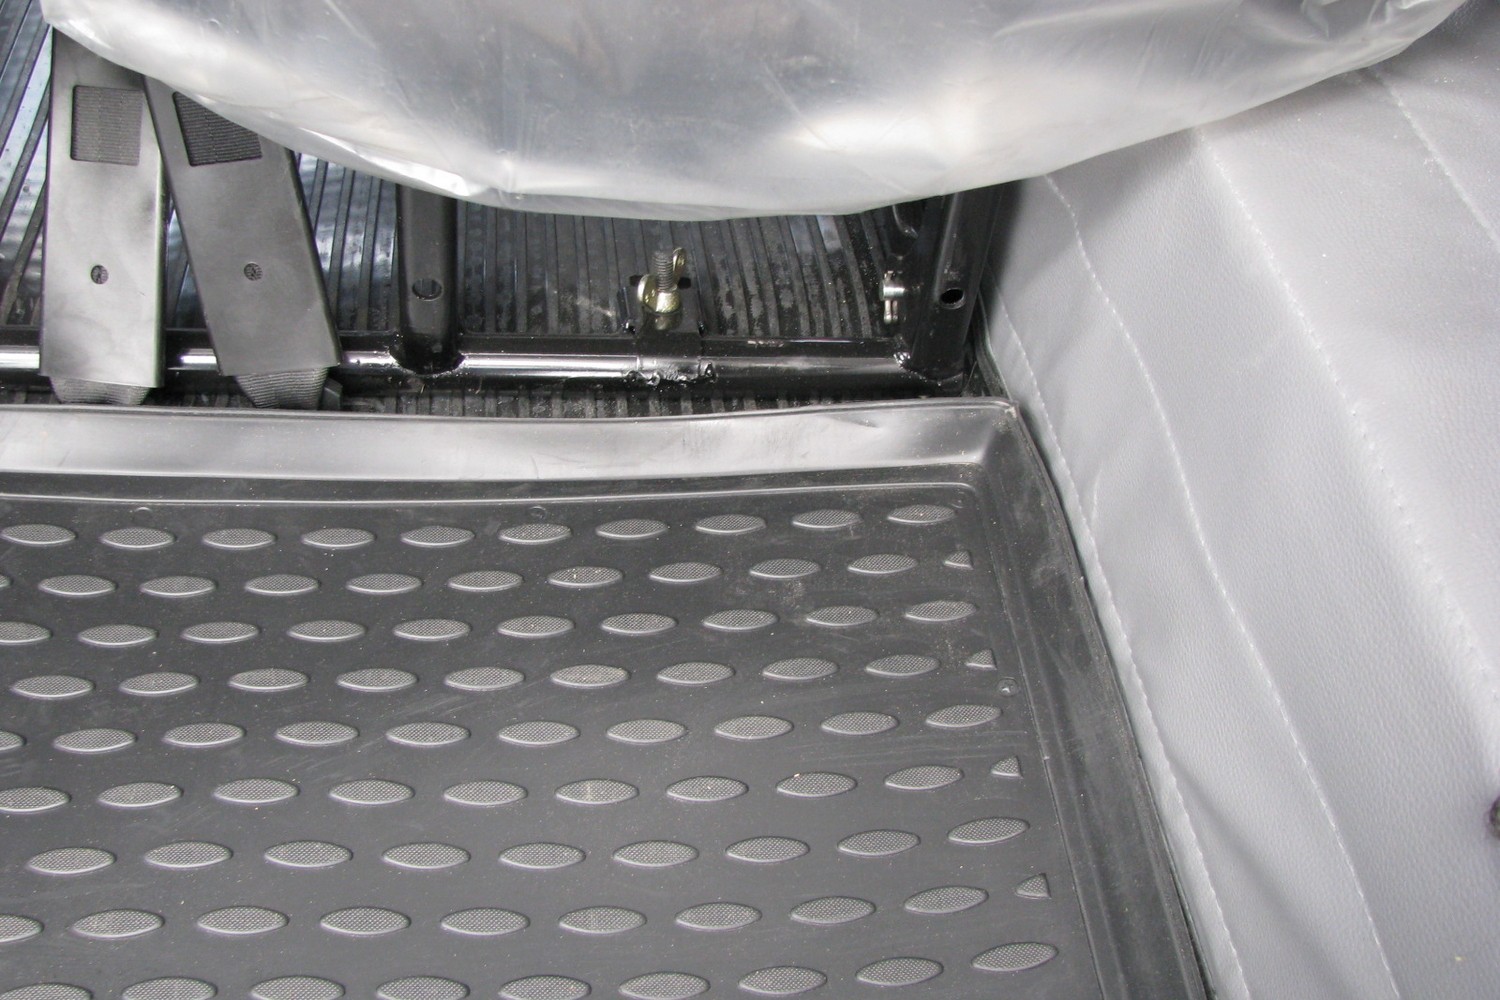 Коврик в багажник UAZ Hunter 03 (полиуретан) ELEMENT NOVLINE-AUTOFAMILY NLC5406B13